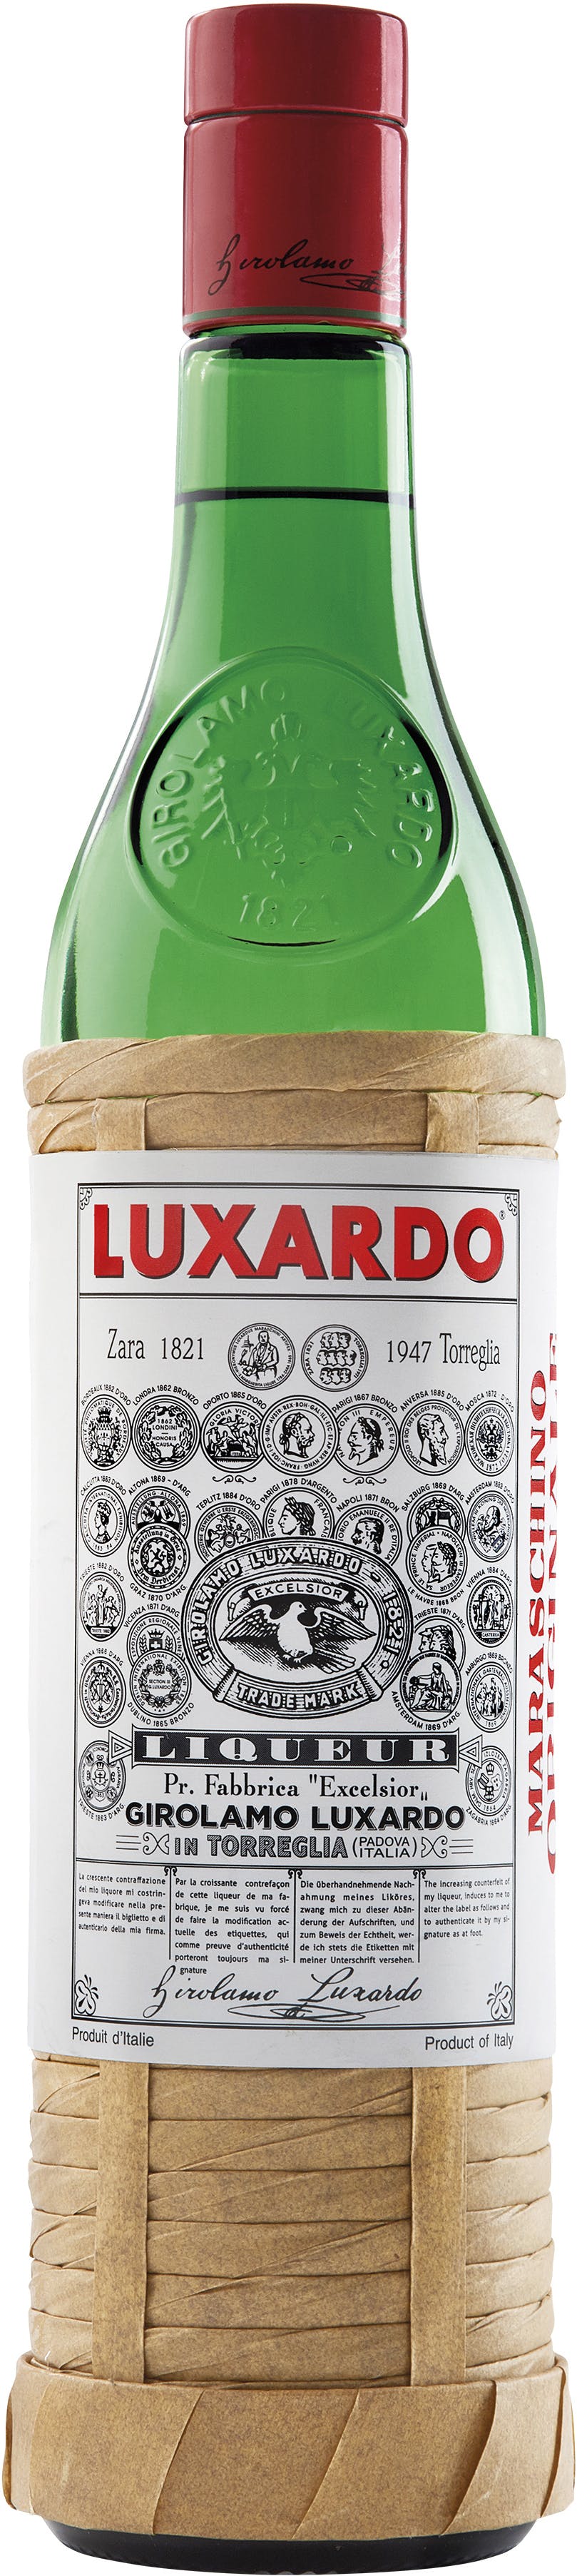 Enthusiast Liquor Kelly\'s - - - & - to Cordials Italy Wine Luxardo Liqueurs $25 - $50